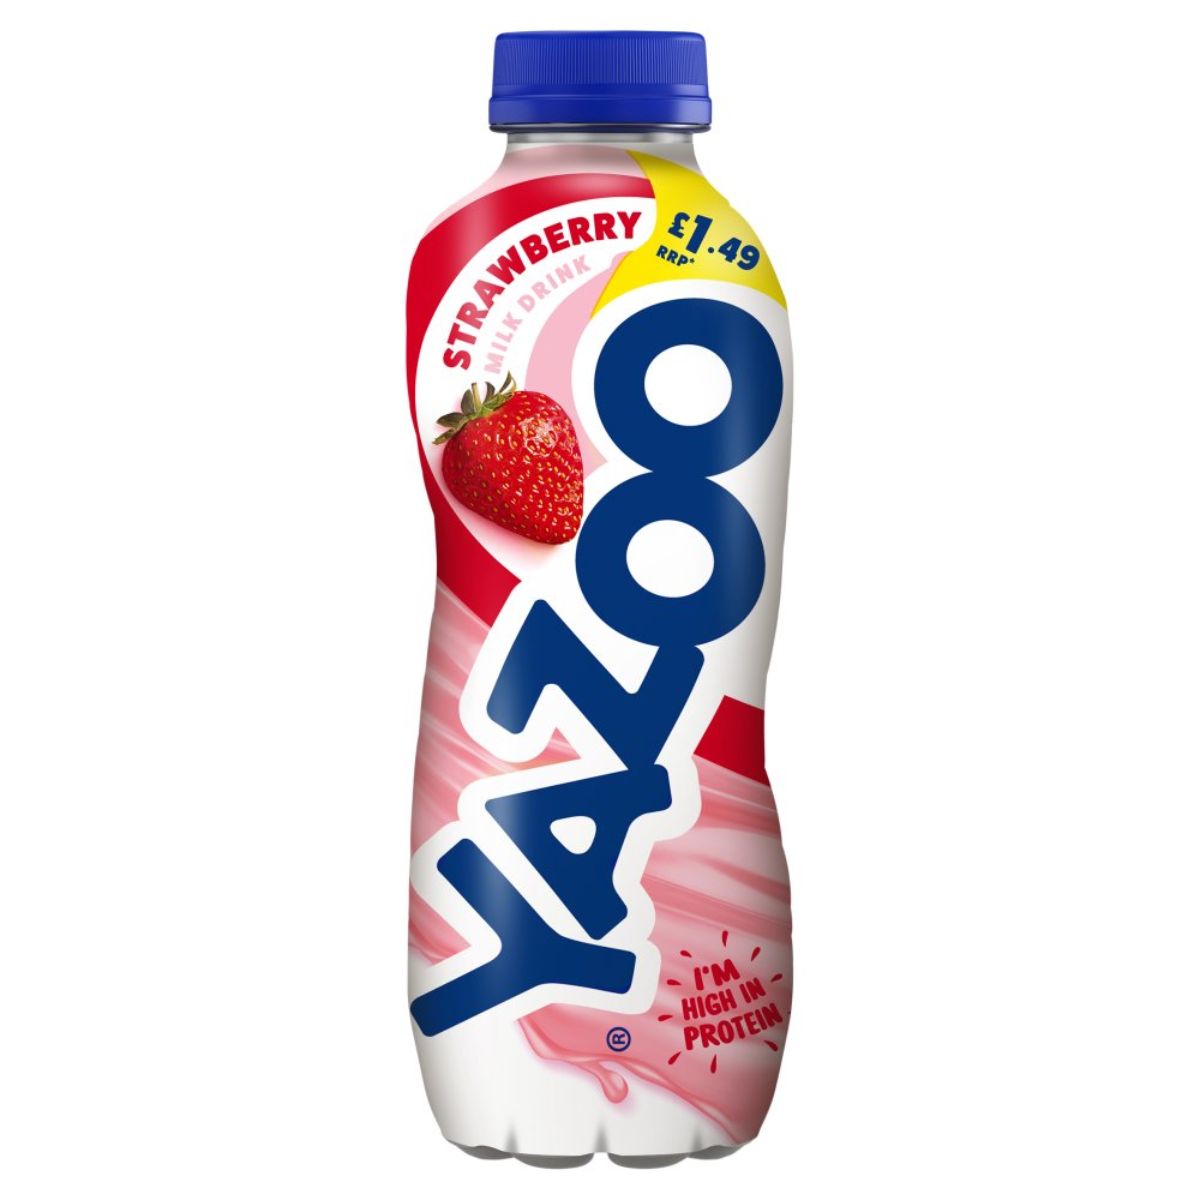 A bottle of Yazoo - Strawberry - 400ml milk.